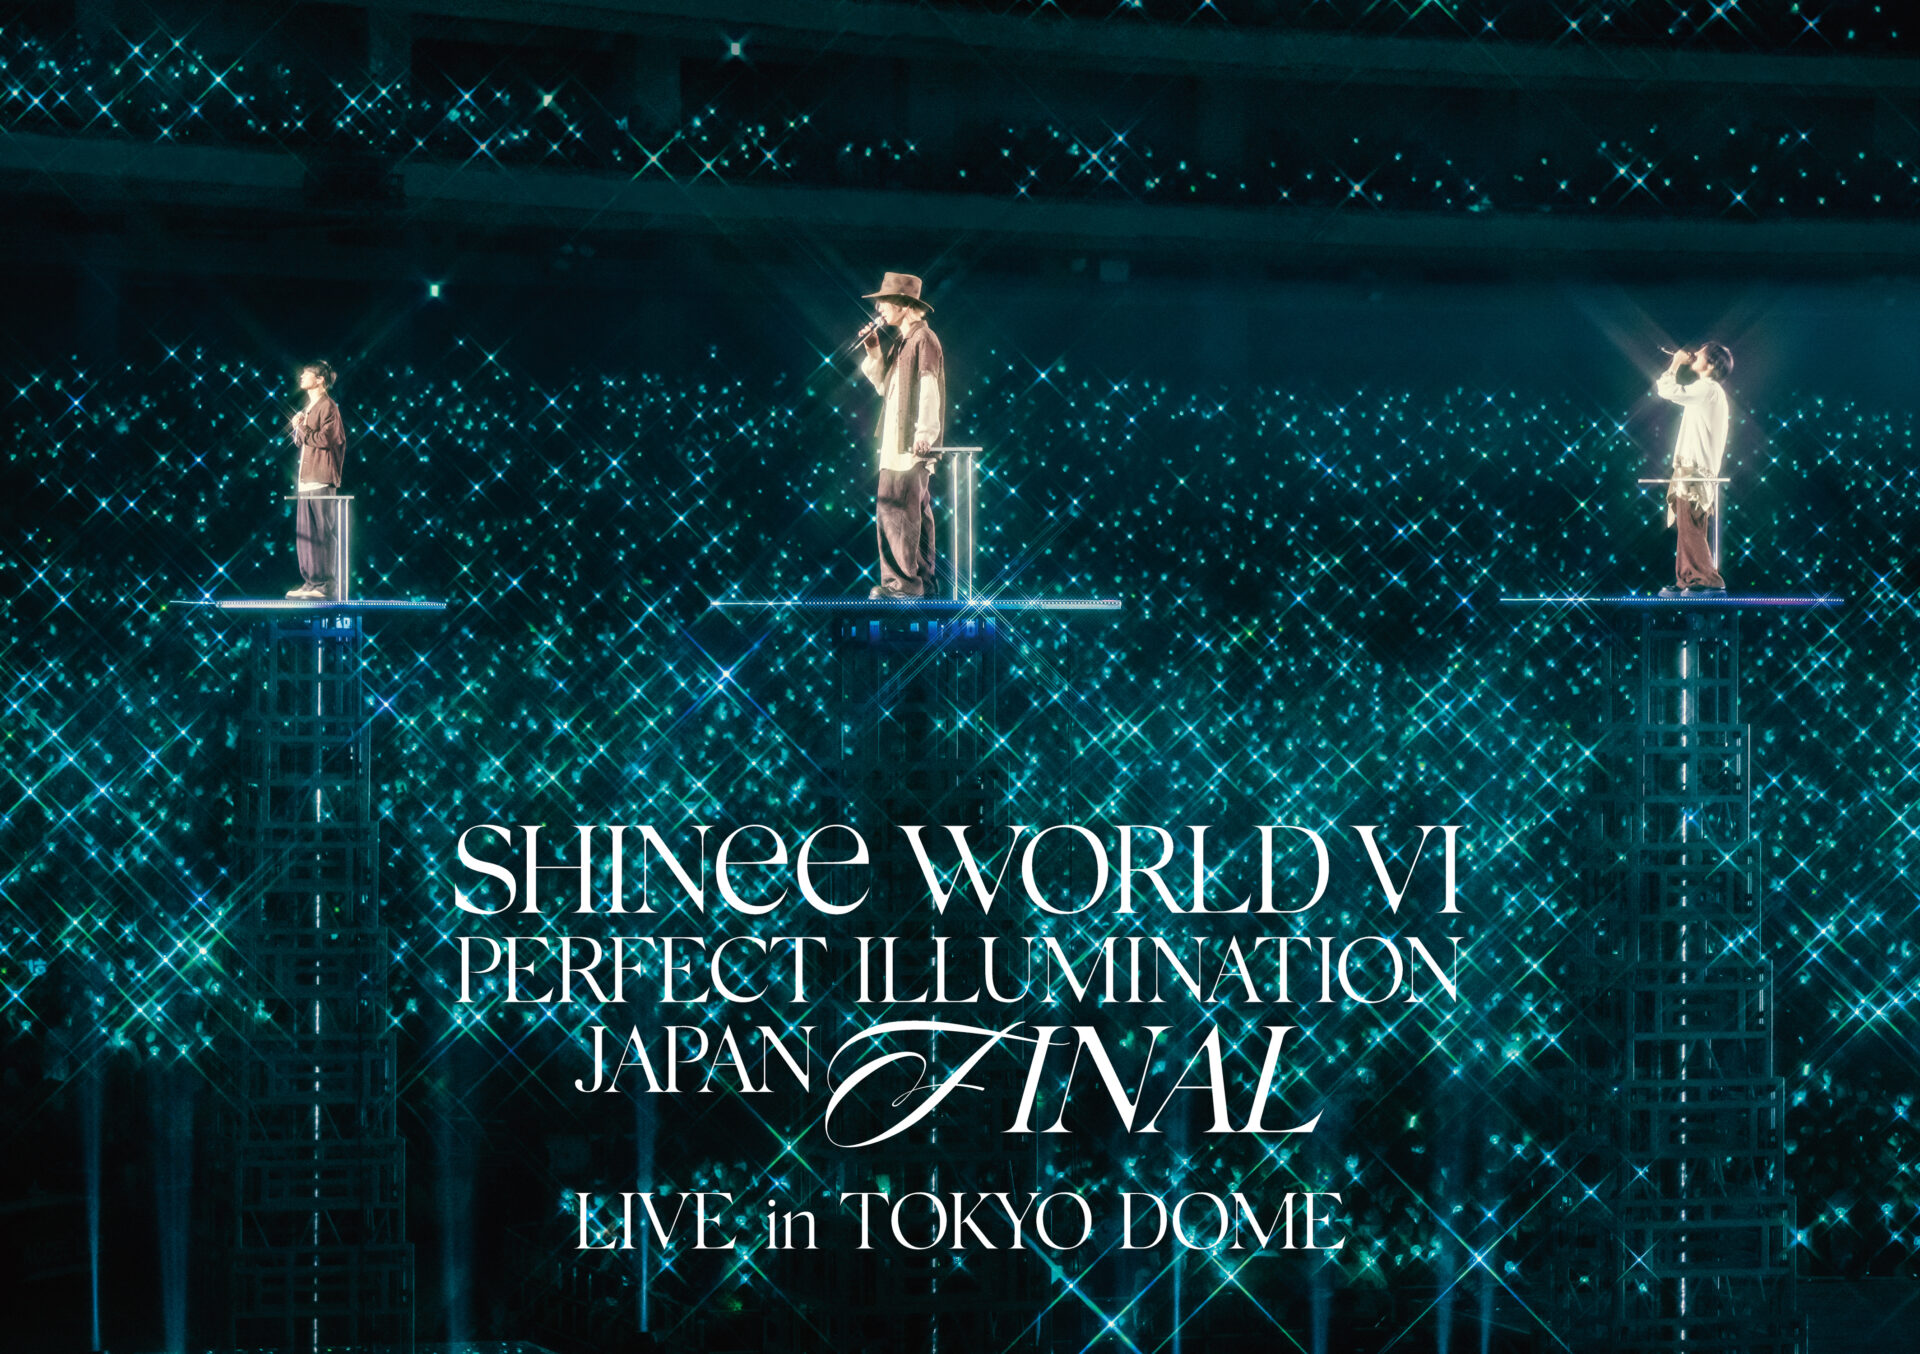 『SHINee WORLD VI [PERFECT ILLUMINATION] JAPAN FINAL LIVE in TOKYO DOME』通常盤ジャケット